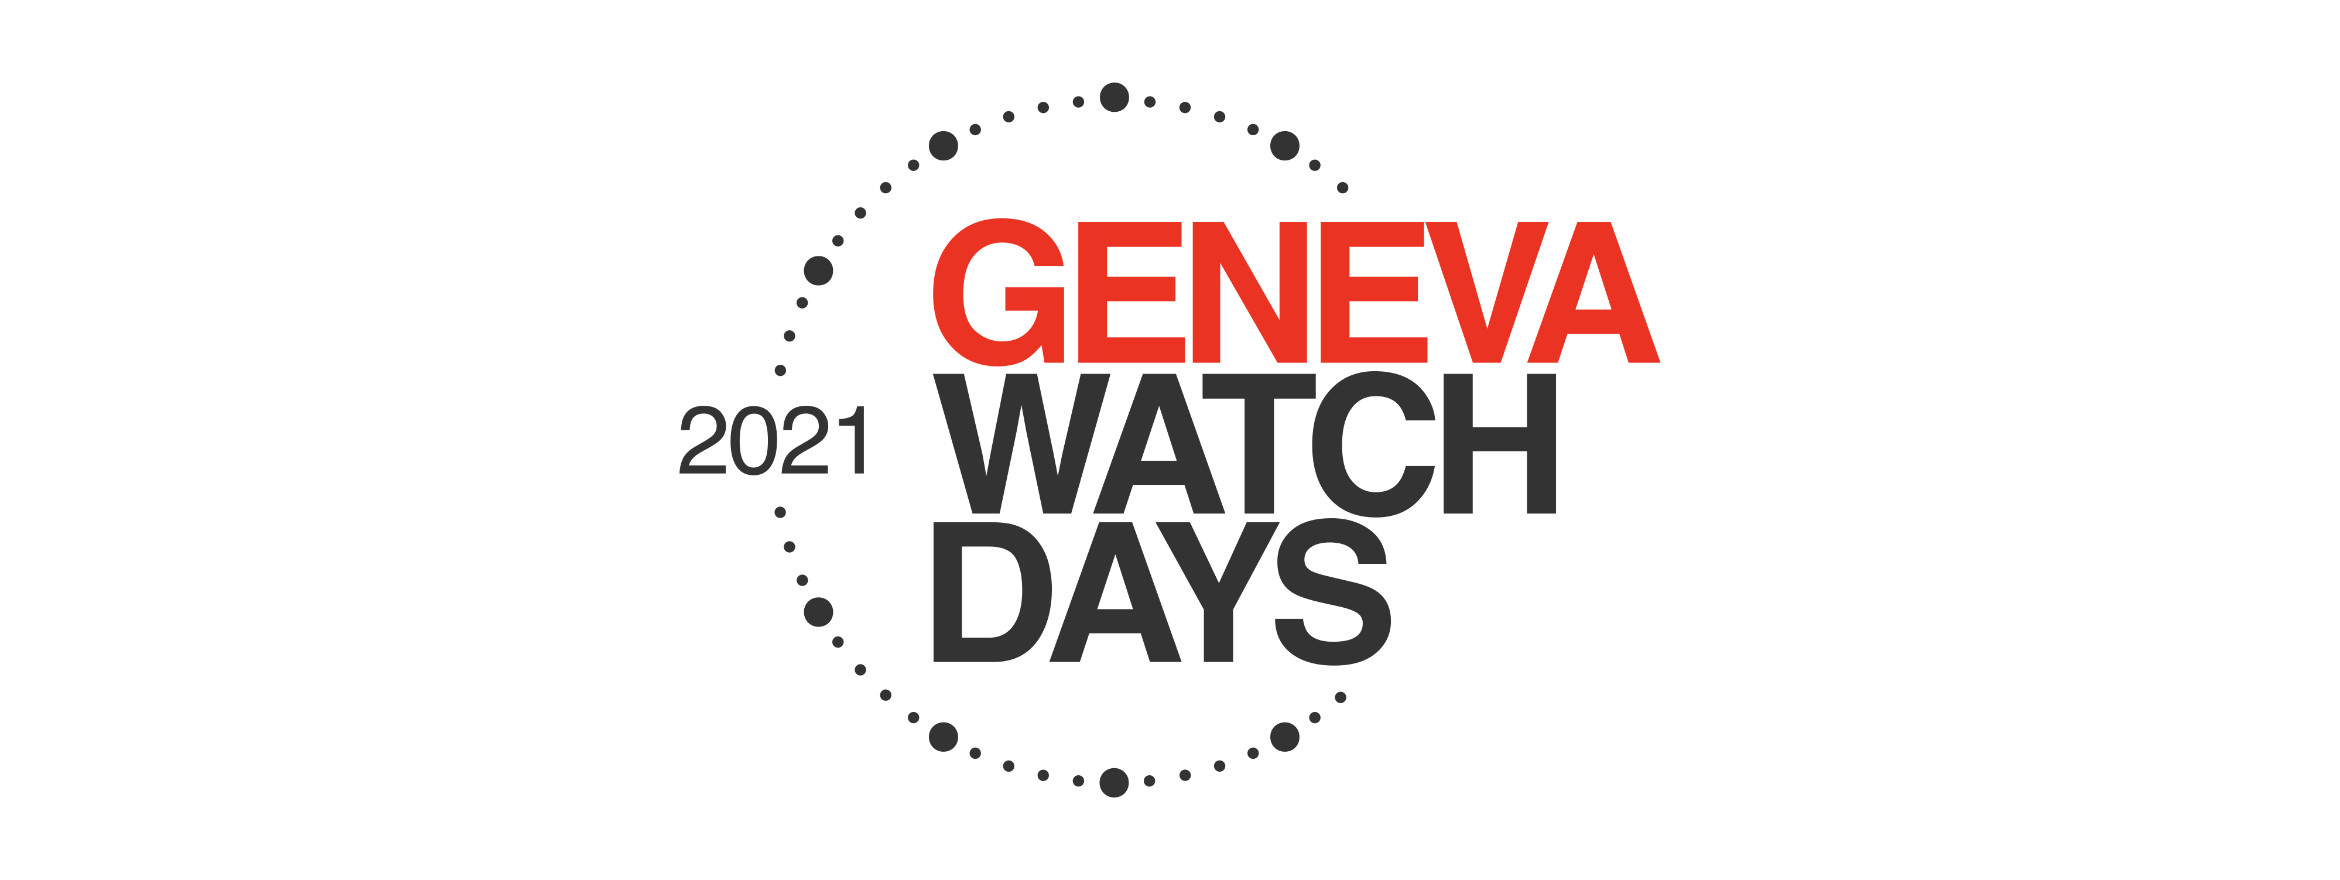 Save The Date: Geneva Watch Days 2021